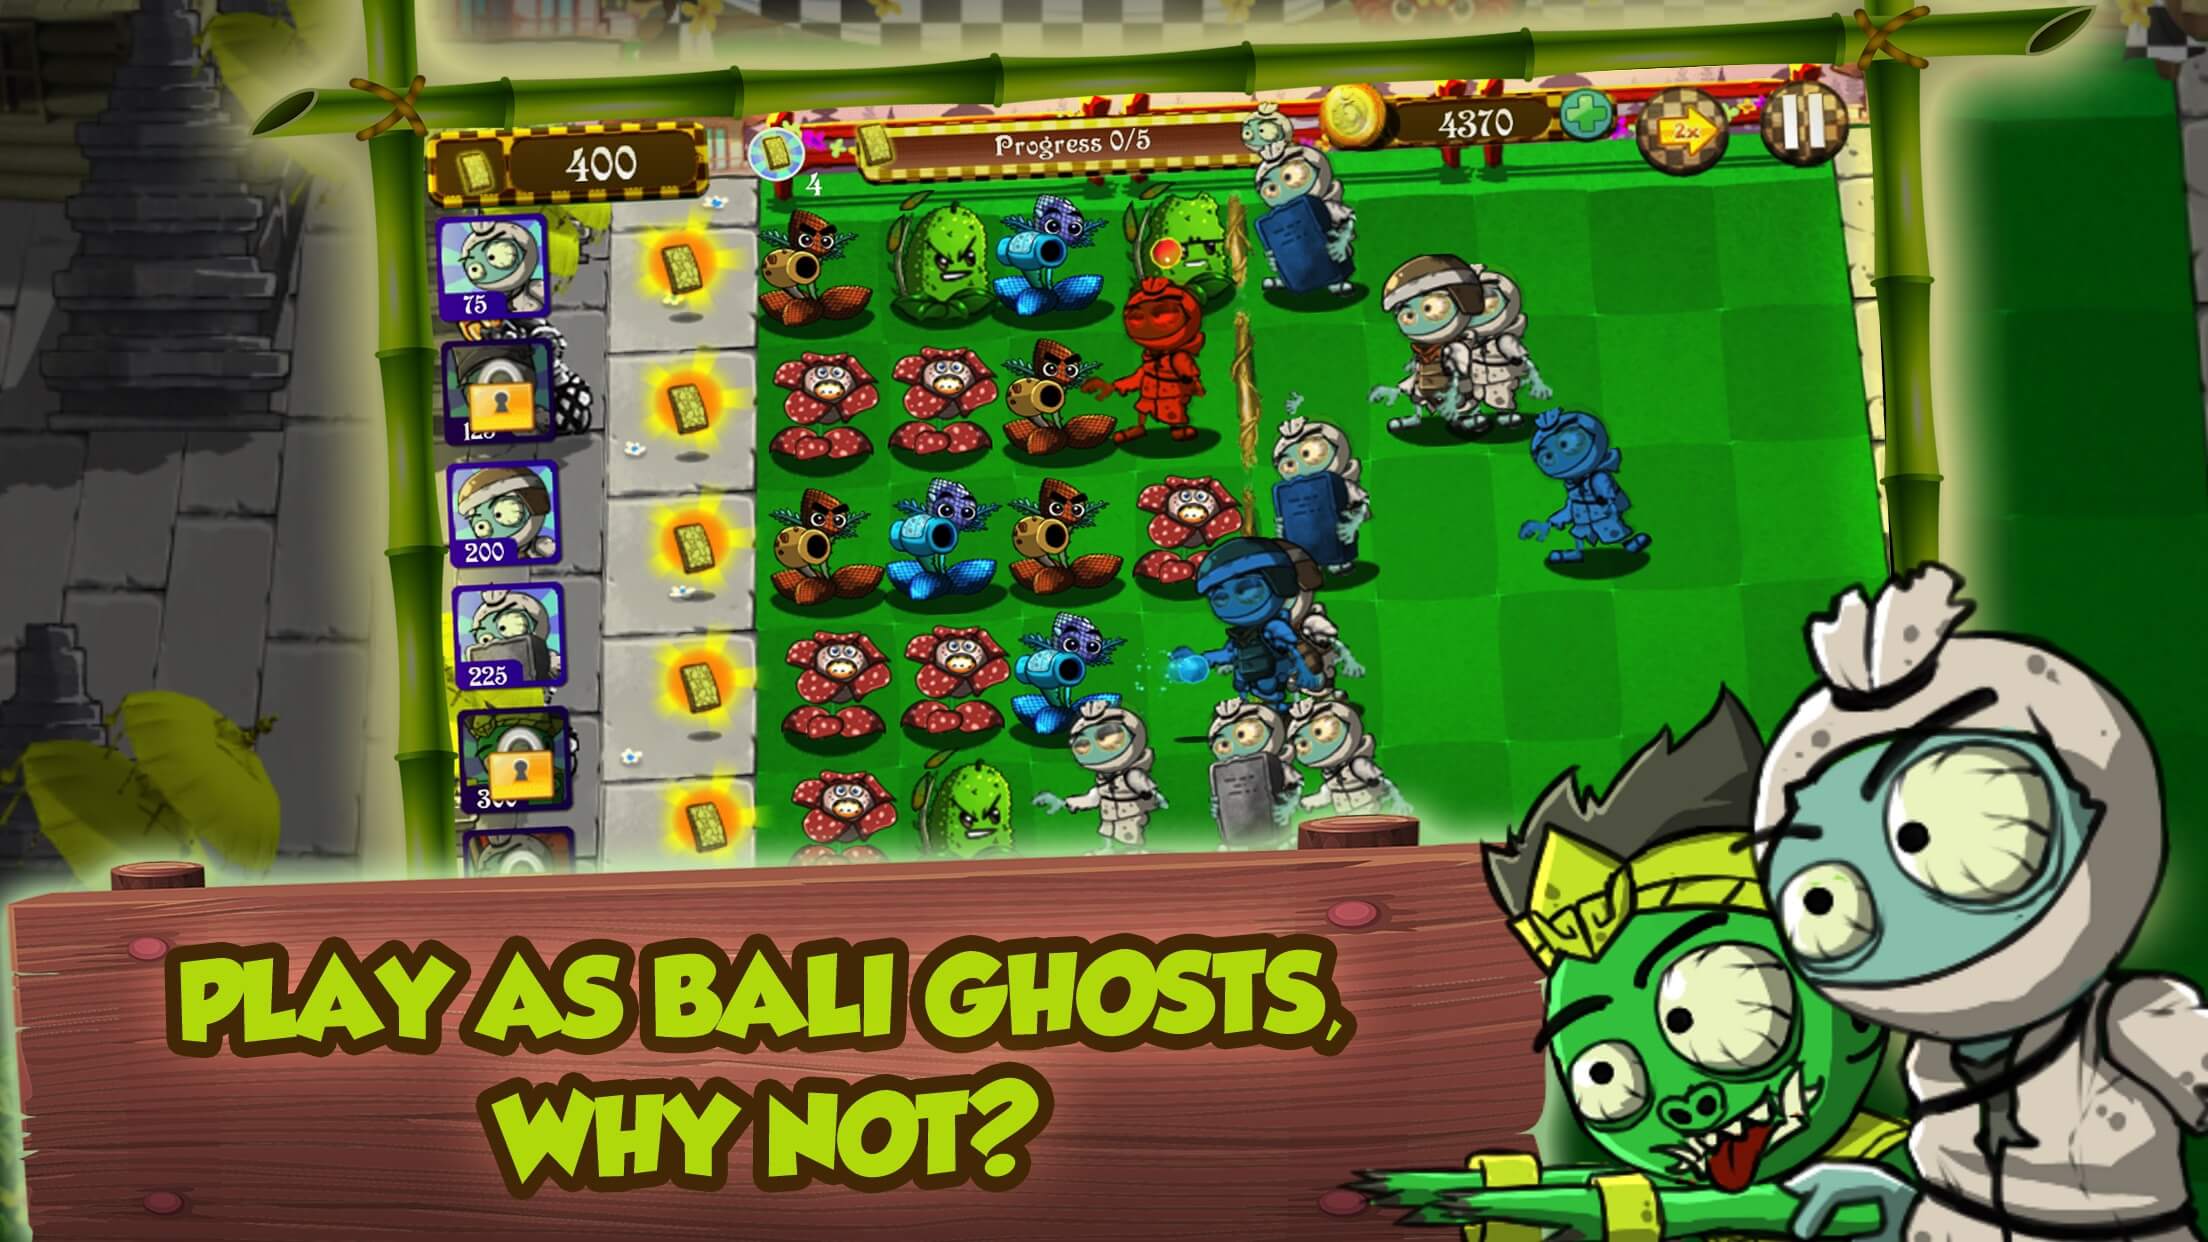 Bali Ghost Battle - Plant Versus Zombie